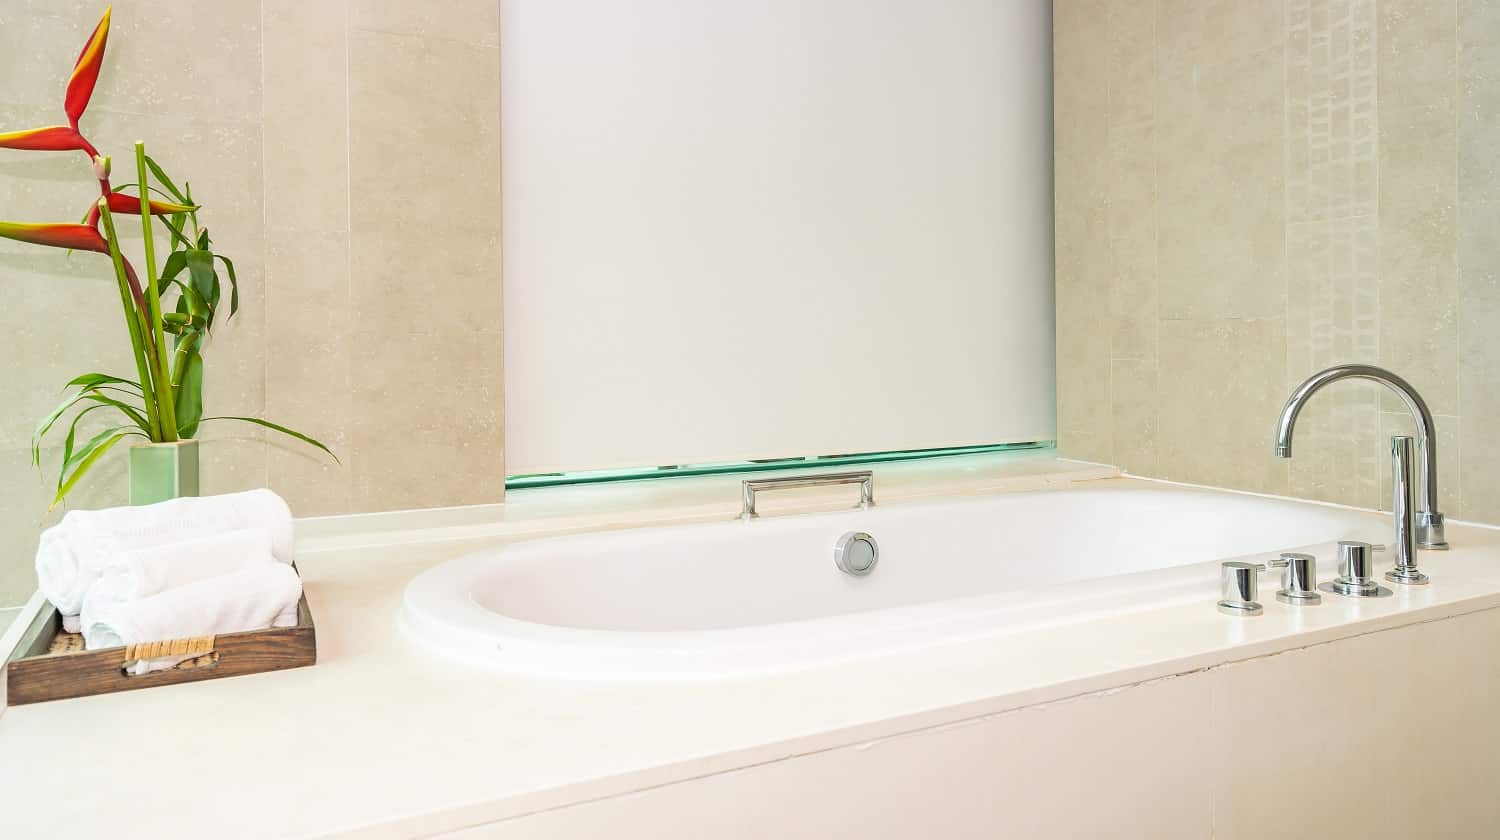 Beautiful luxury and clean white bathtub decoration interior of bathroom